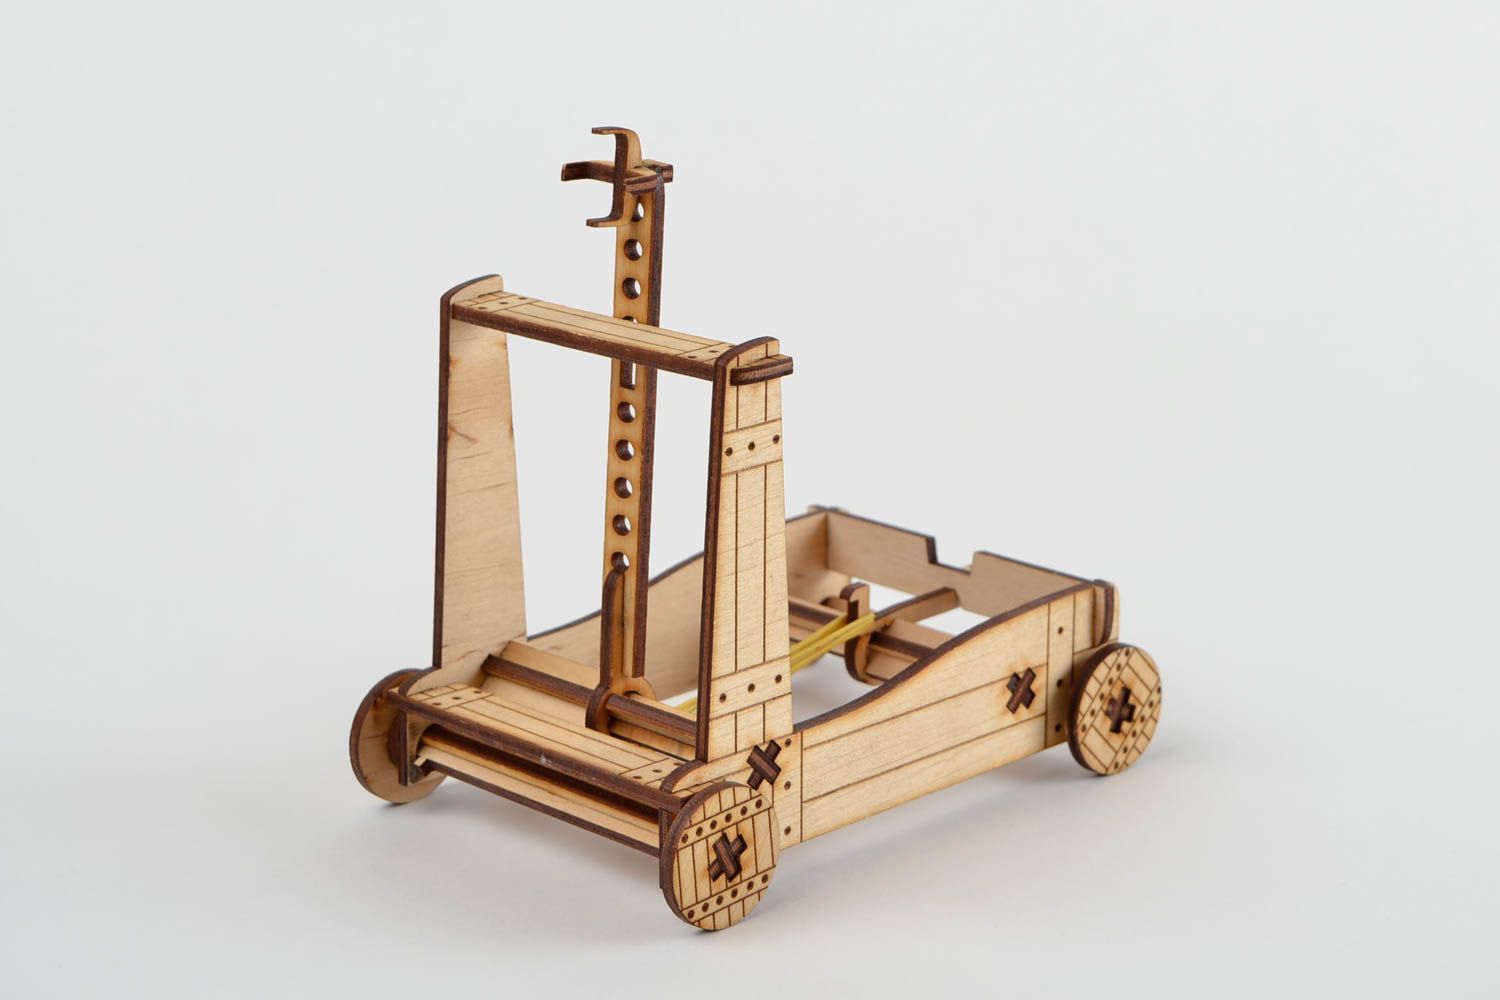 Handmade designer wooden souvenir stylish toy for kids blank for creativity photo 4